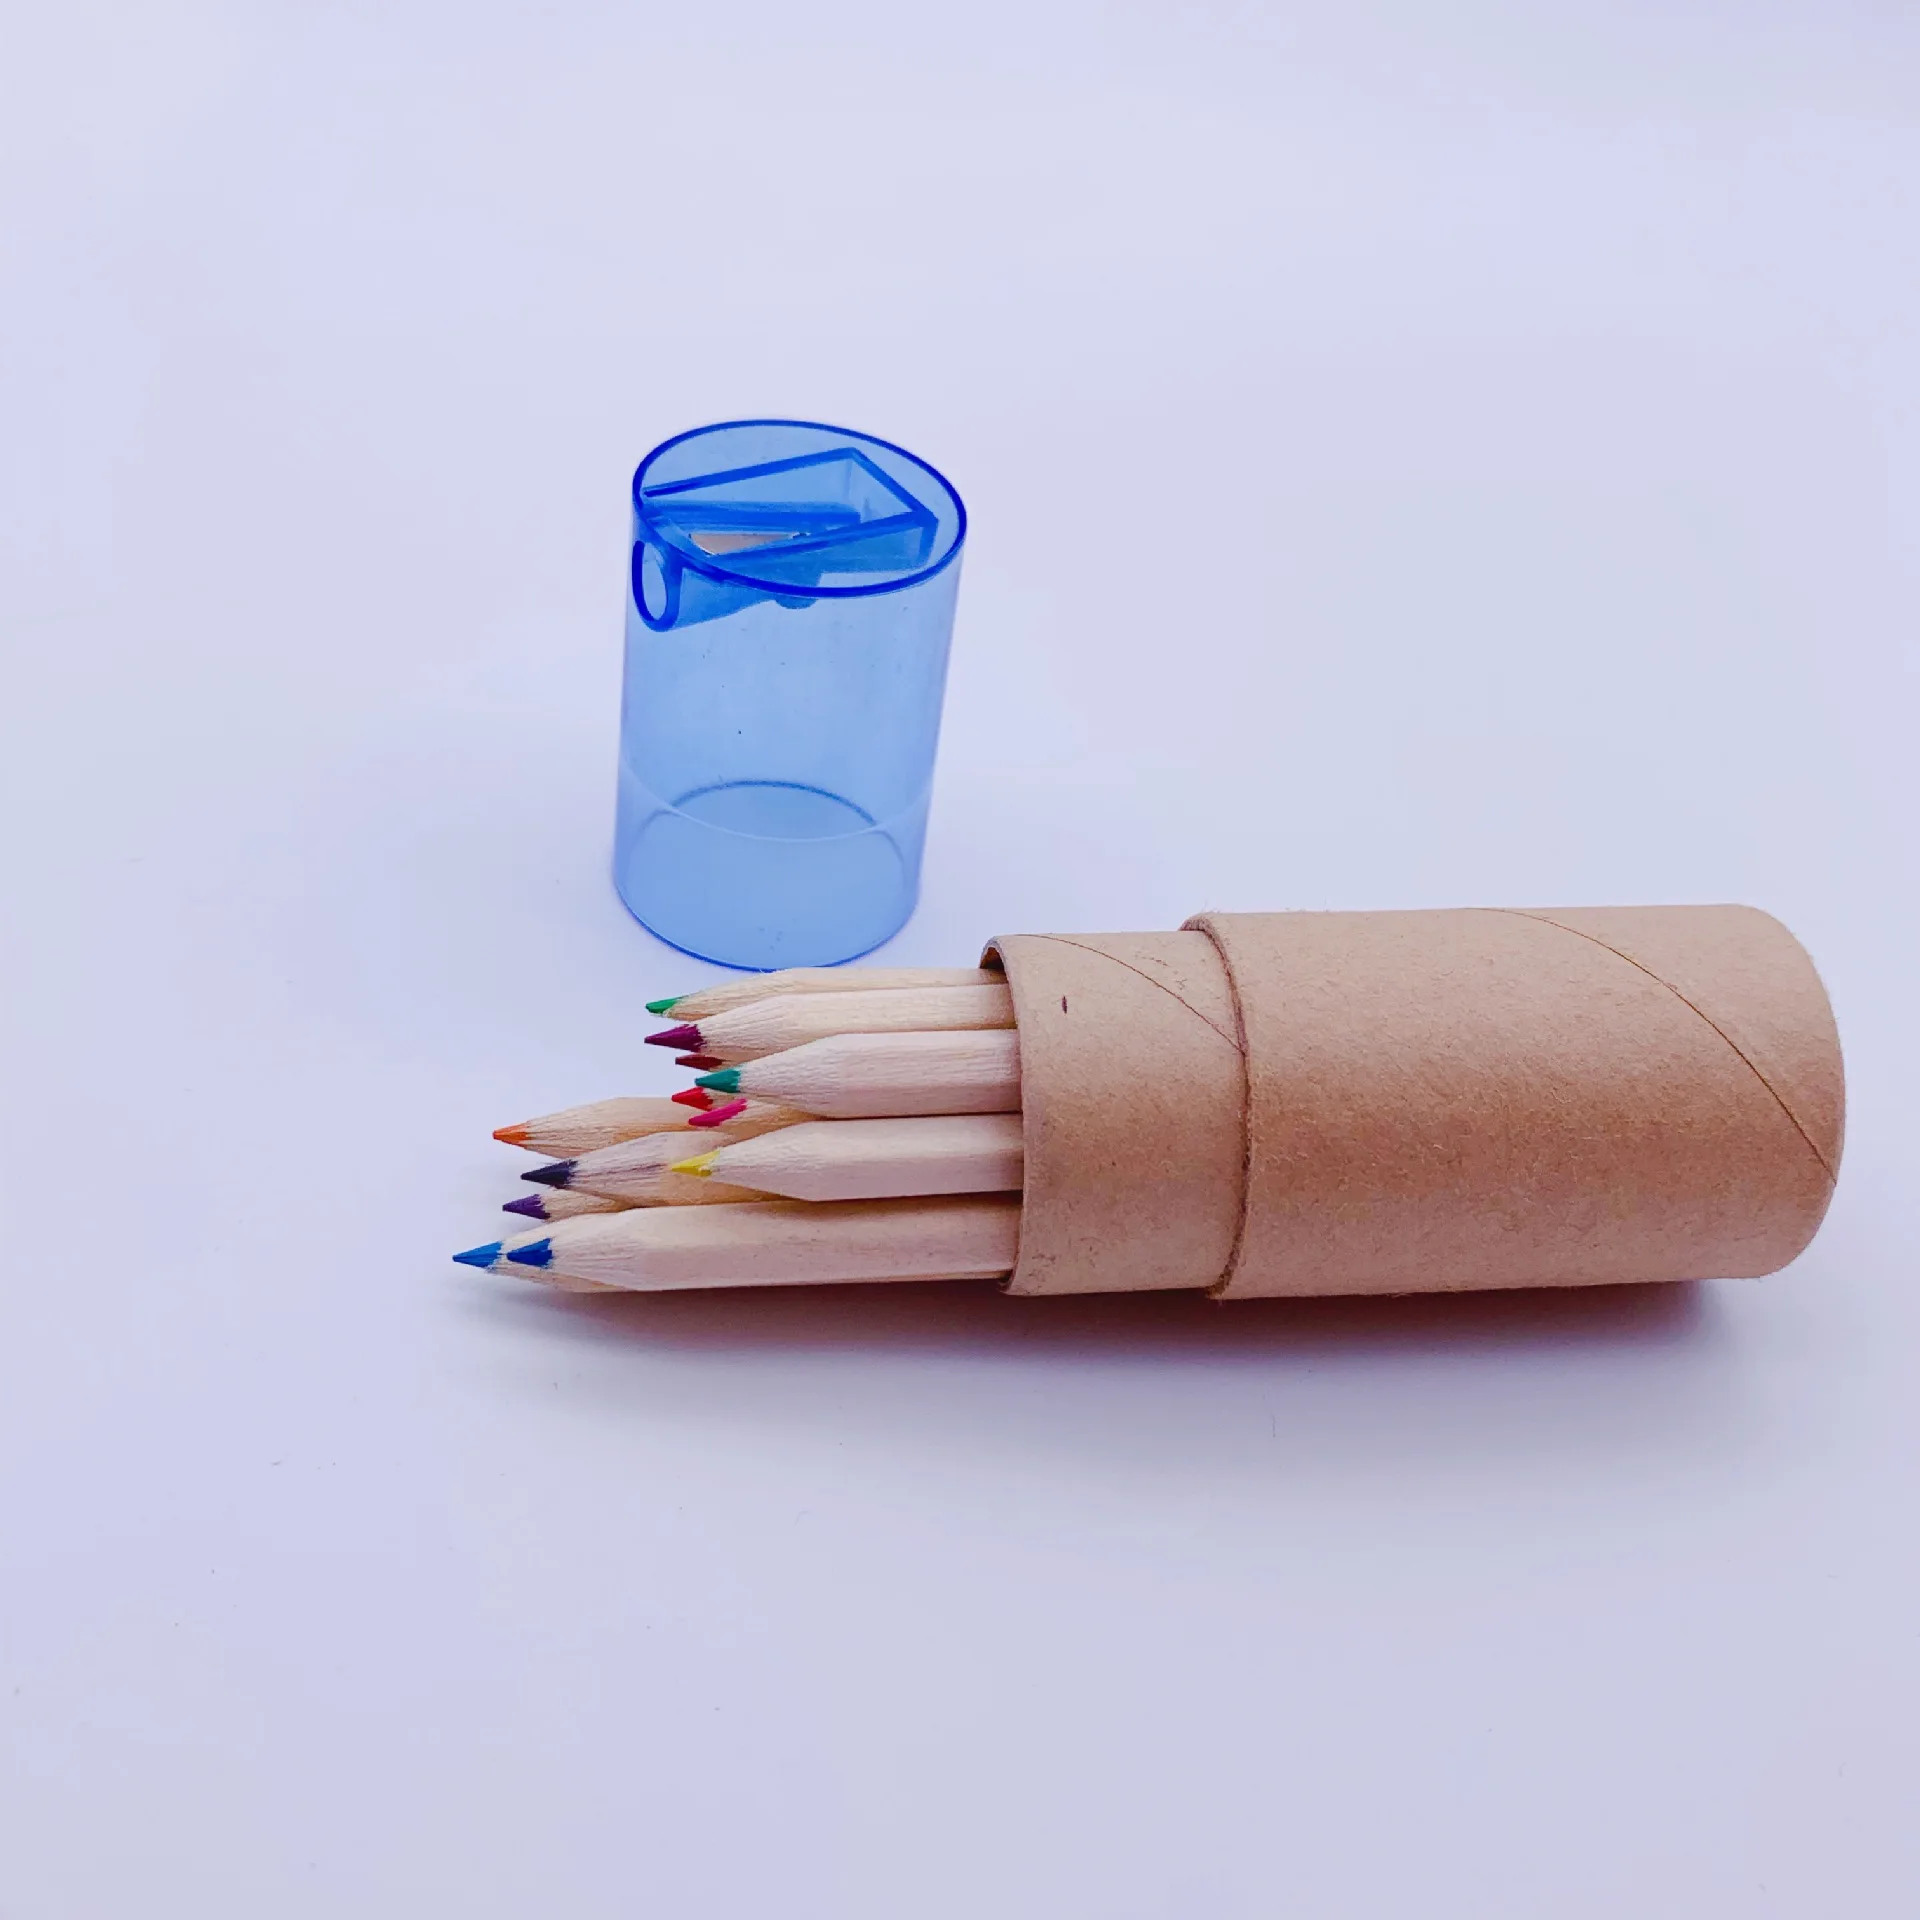 Promo 12 pieces color pencil set with sharpener in case 12 colors pencil